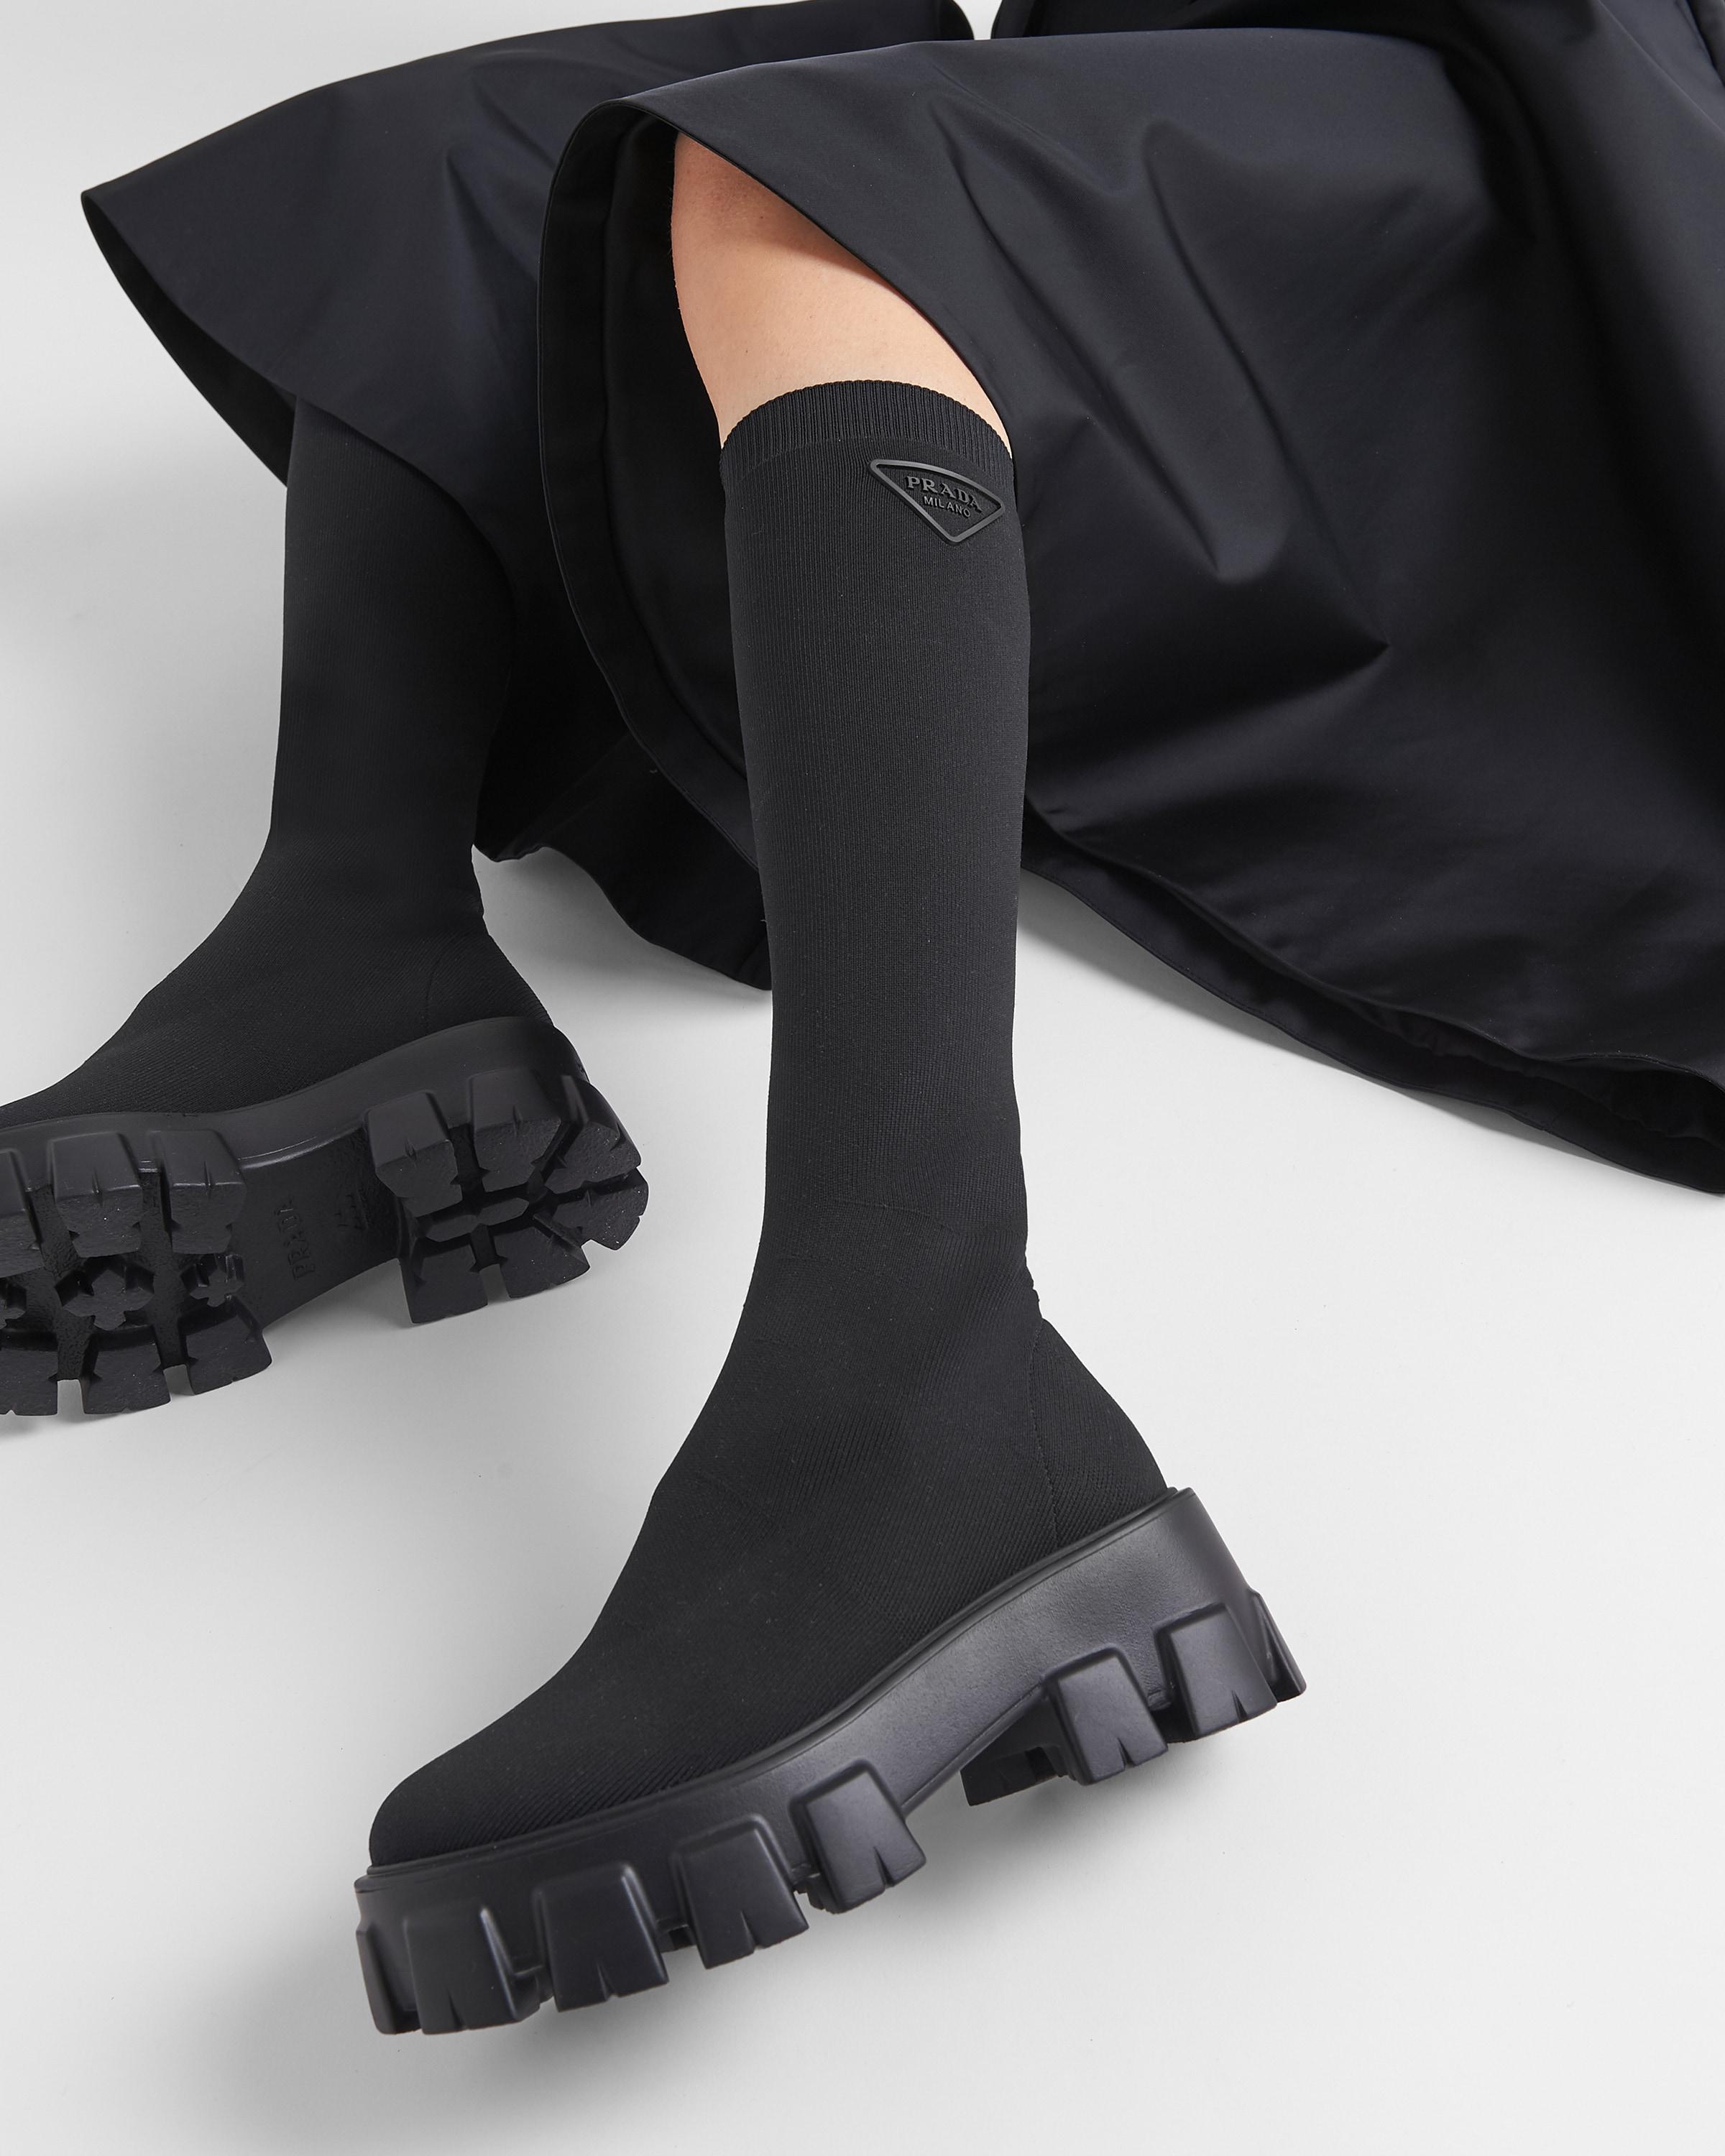 Prada Monolith Knit Boots in Black | Lyst